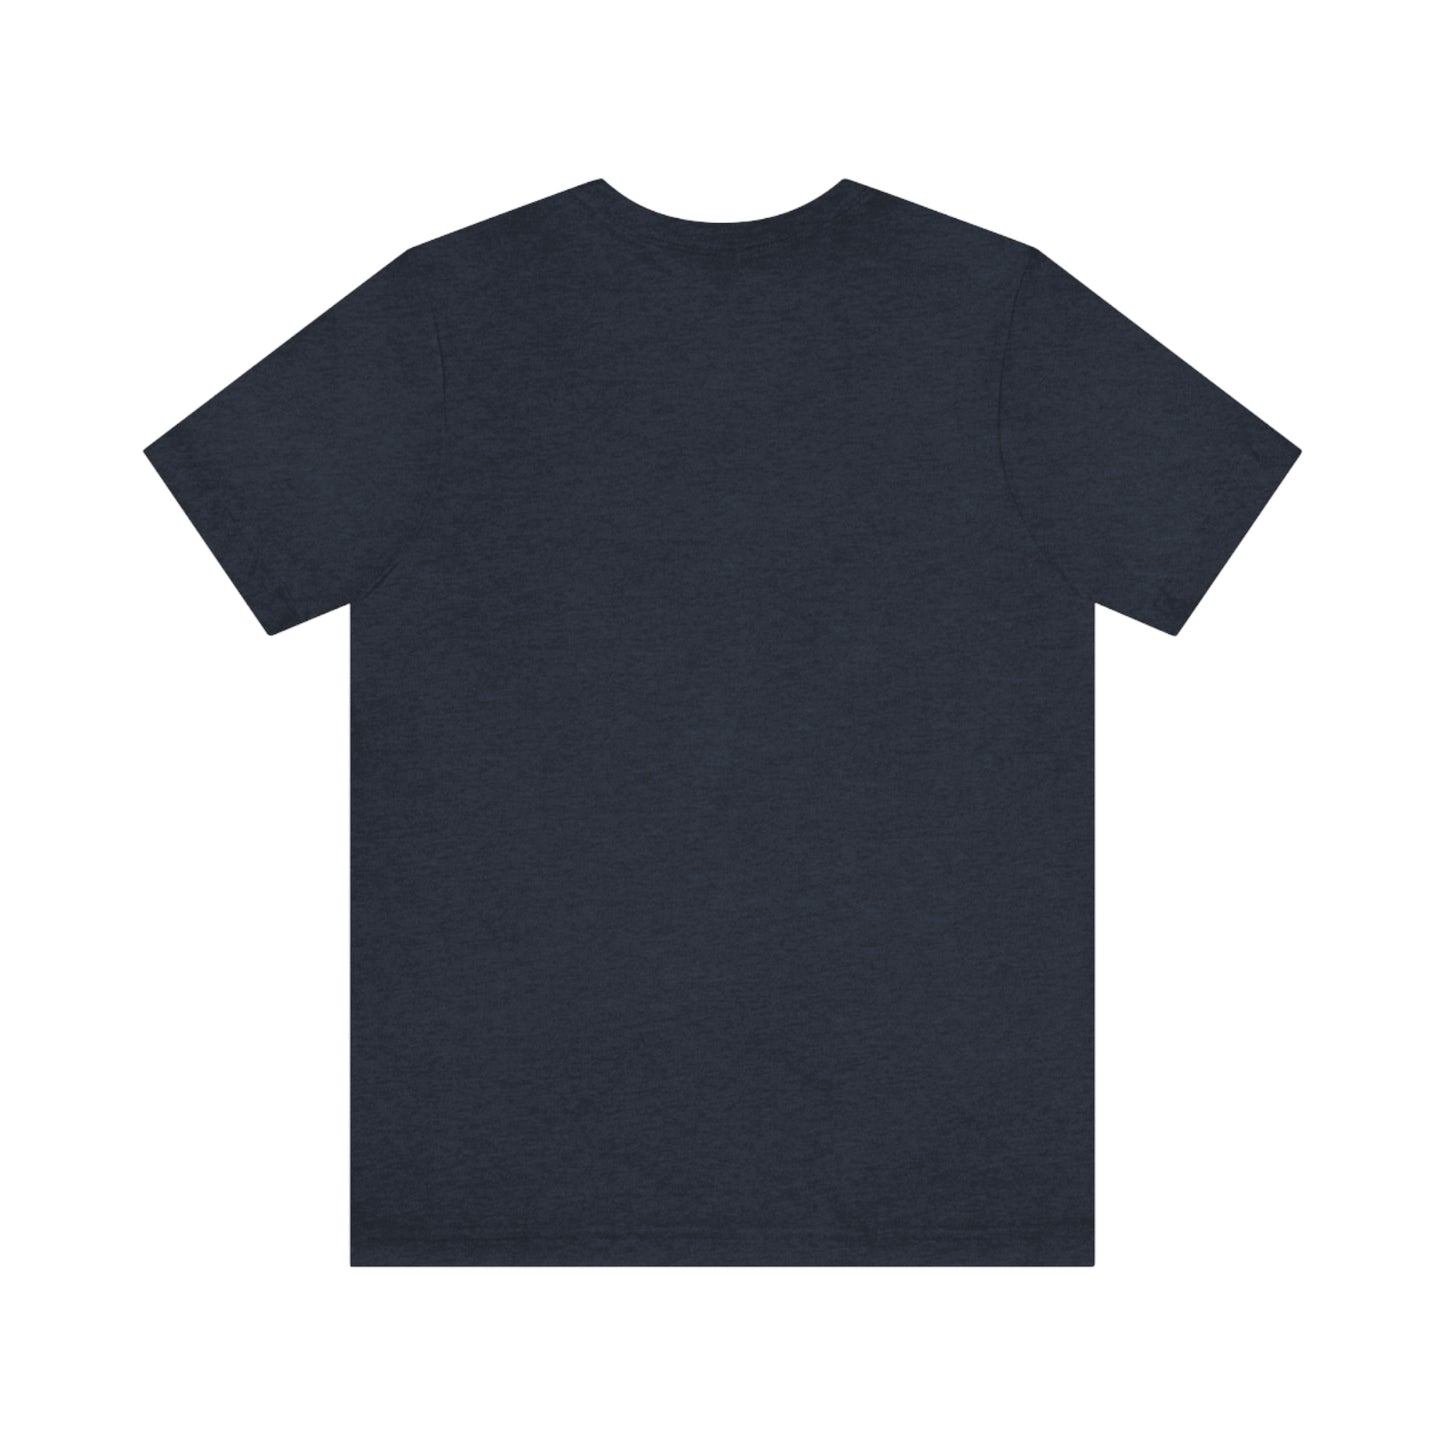 Deinopis logo - Unisex Jersey Short Sleeve Shirt